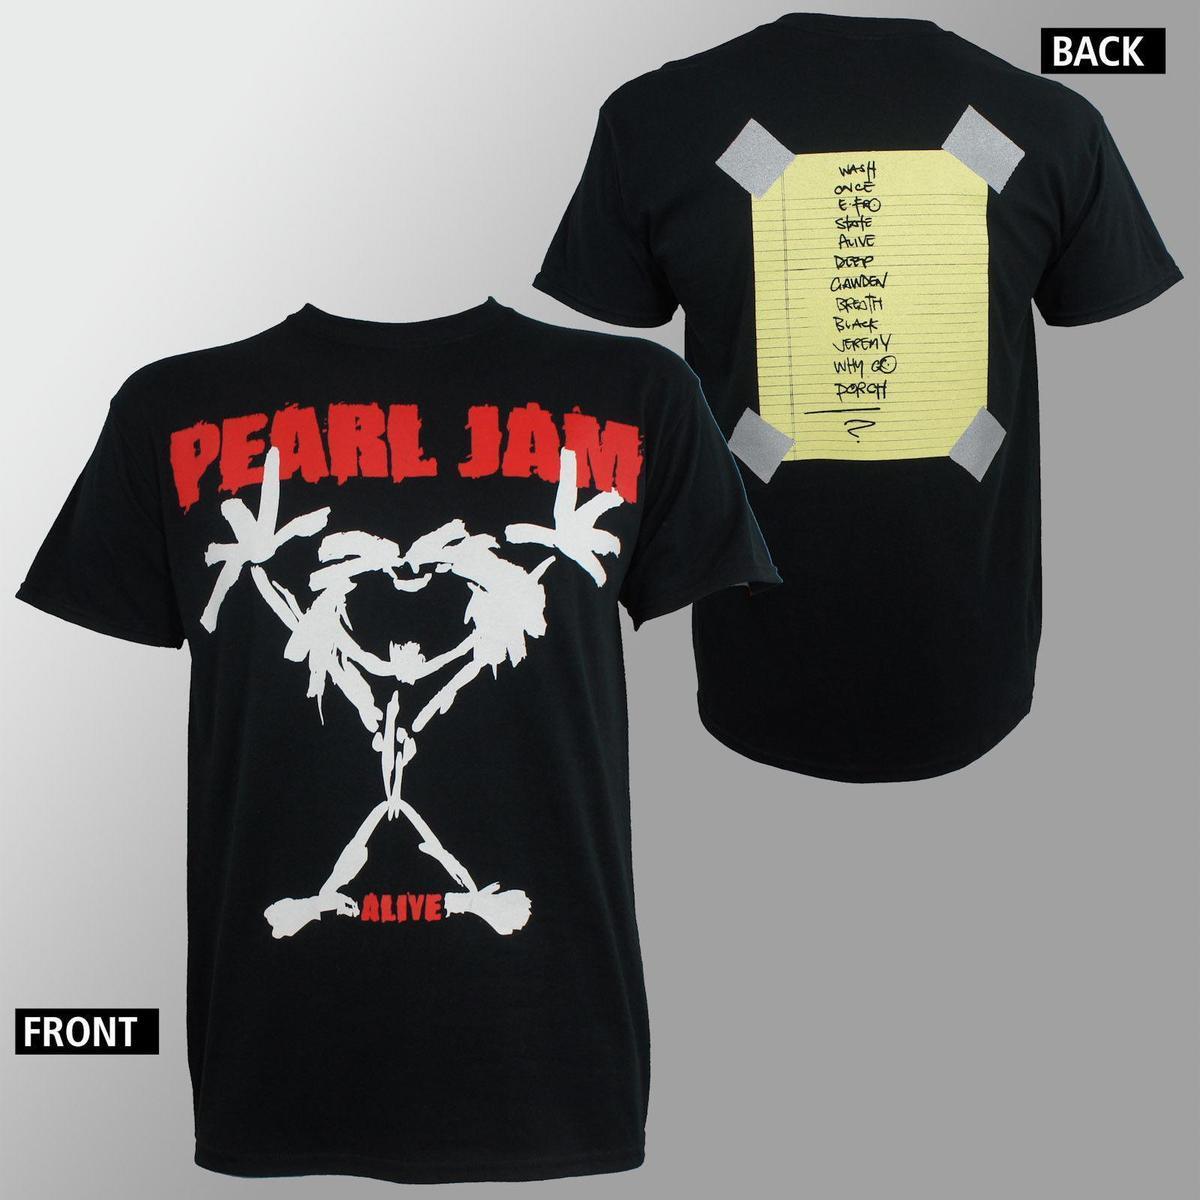 Pearl Jam Stickman Logo - Authentic PEARL JAM Stickman Logo T SHIRT S M L XL NEW Buy T Shirts